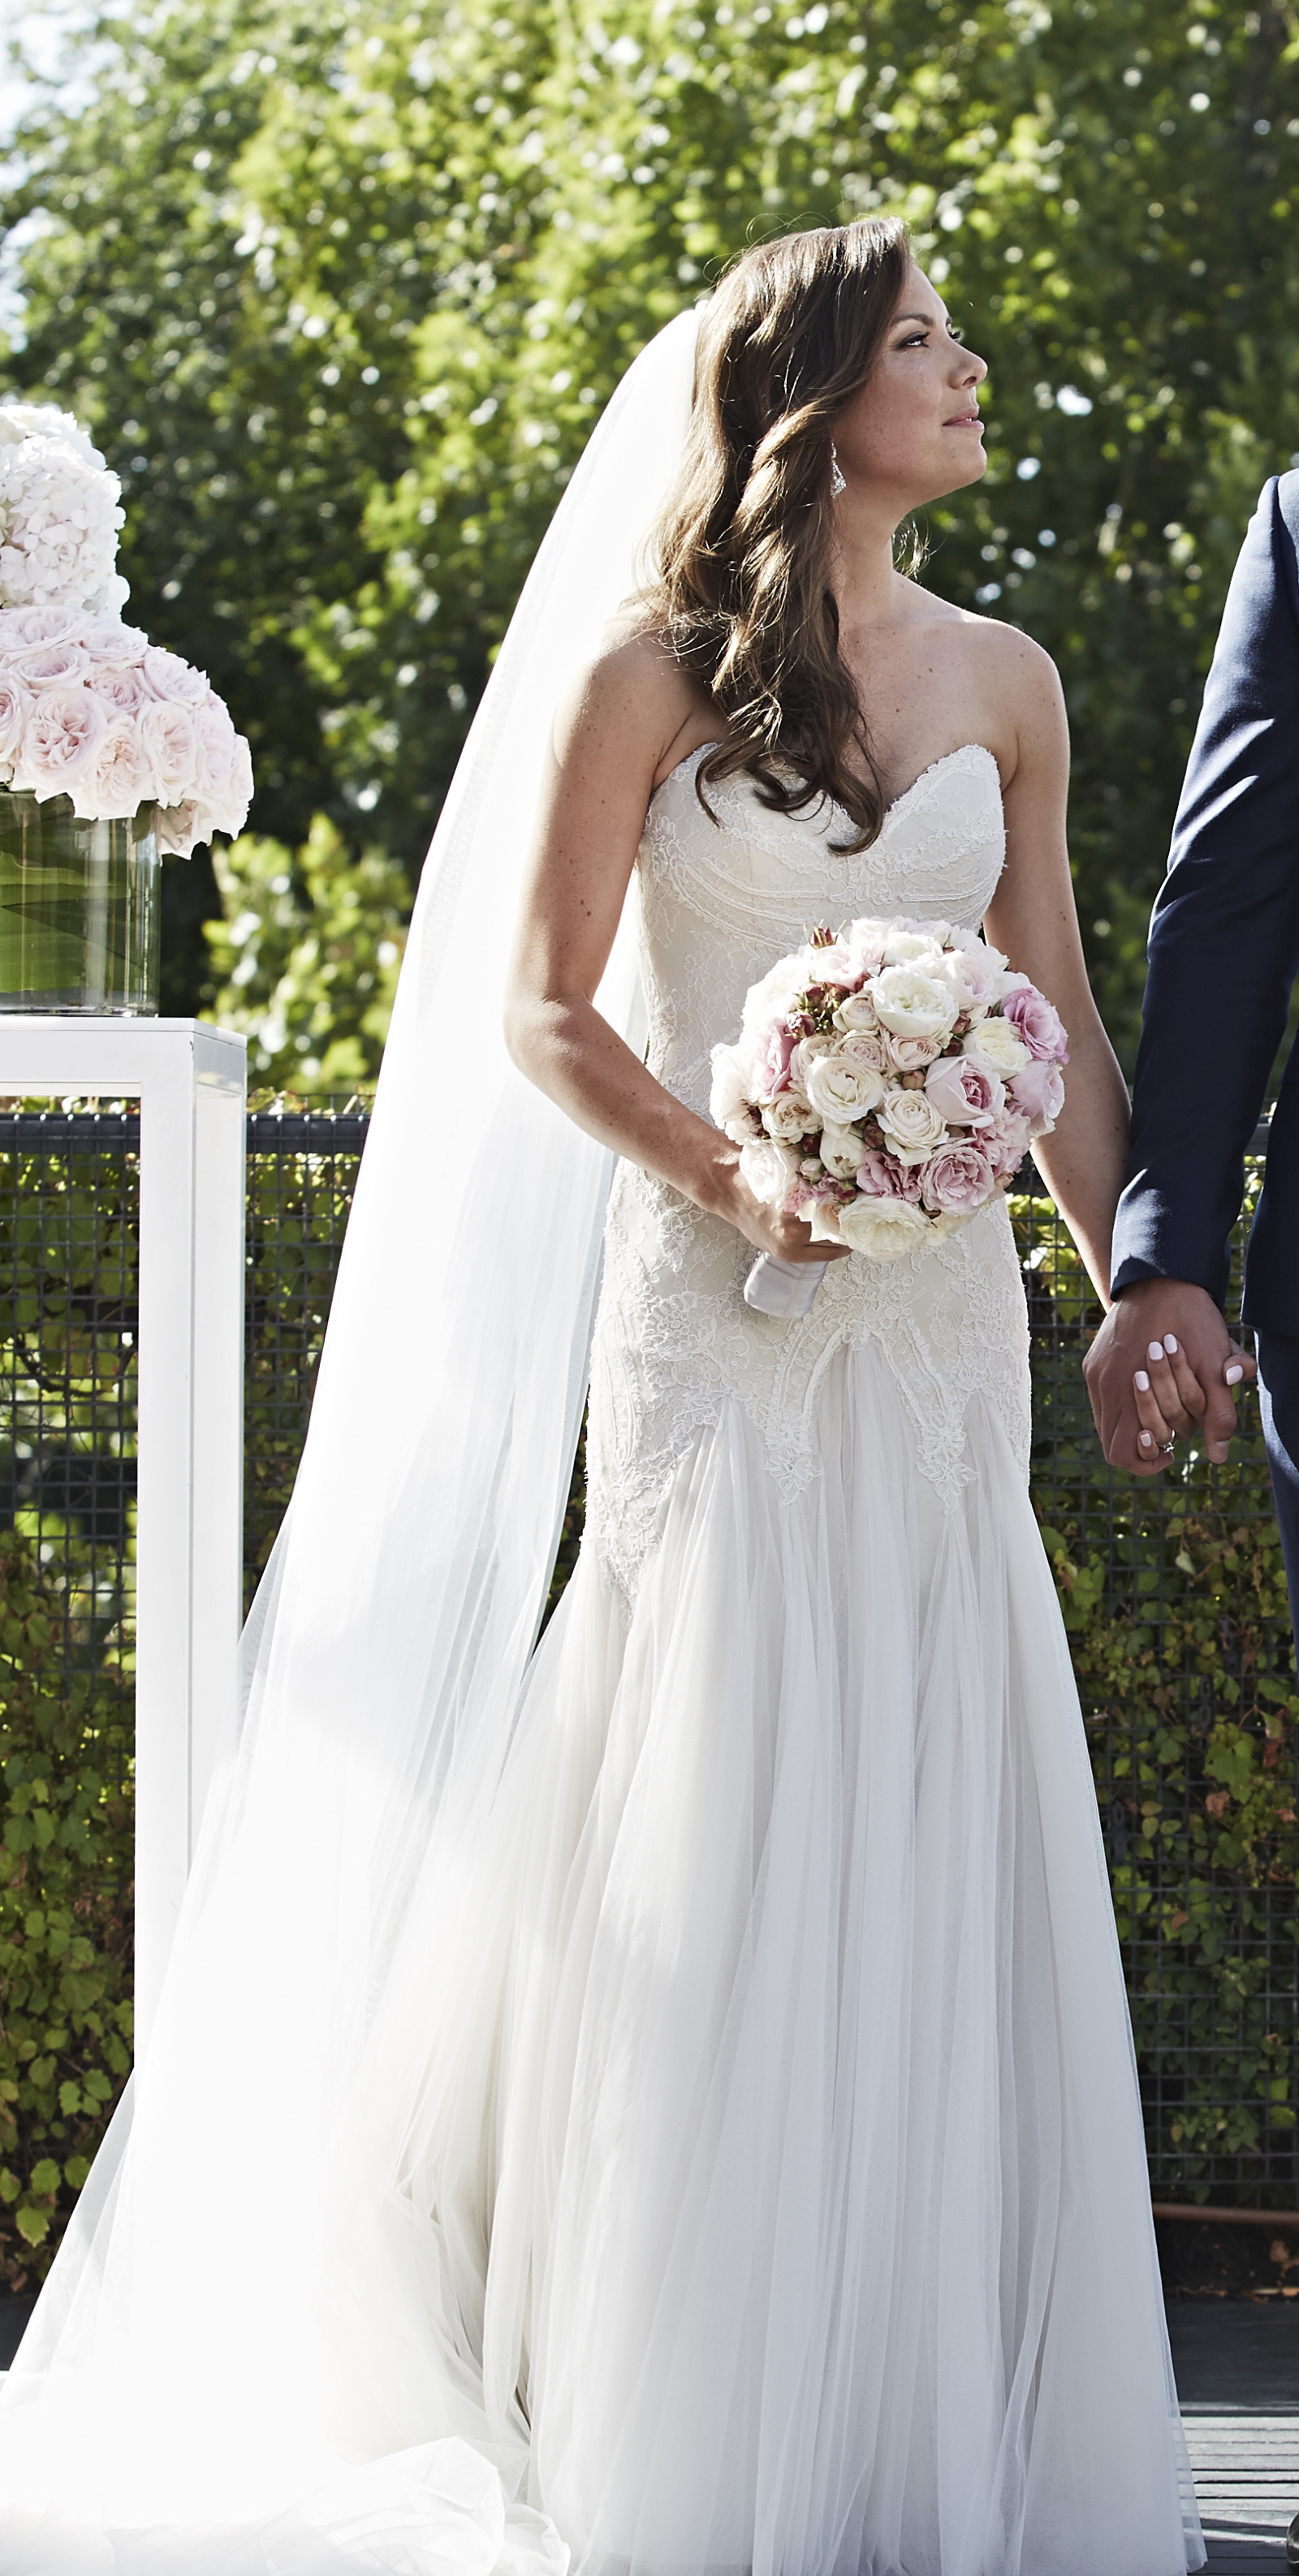 Baccini & Hill Tivoli Wedding Dress on Sale 78% Off